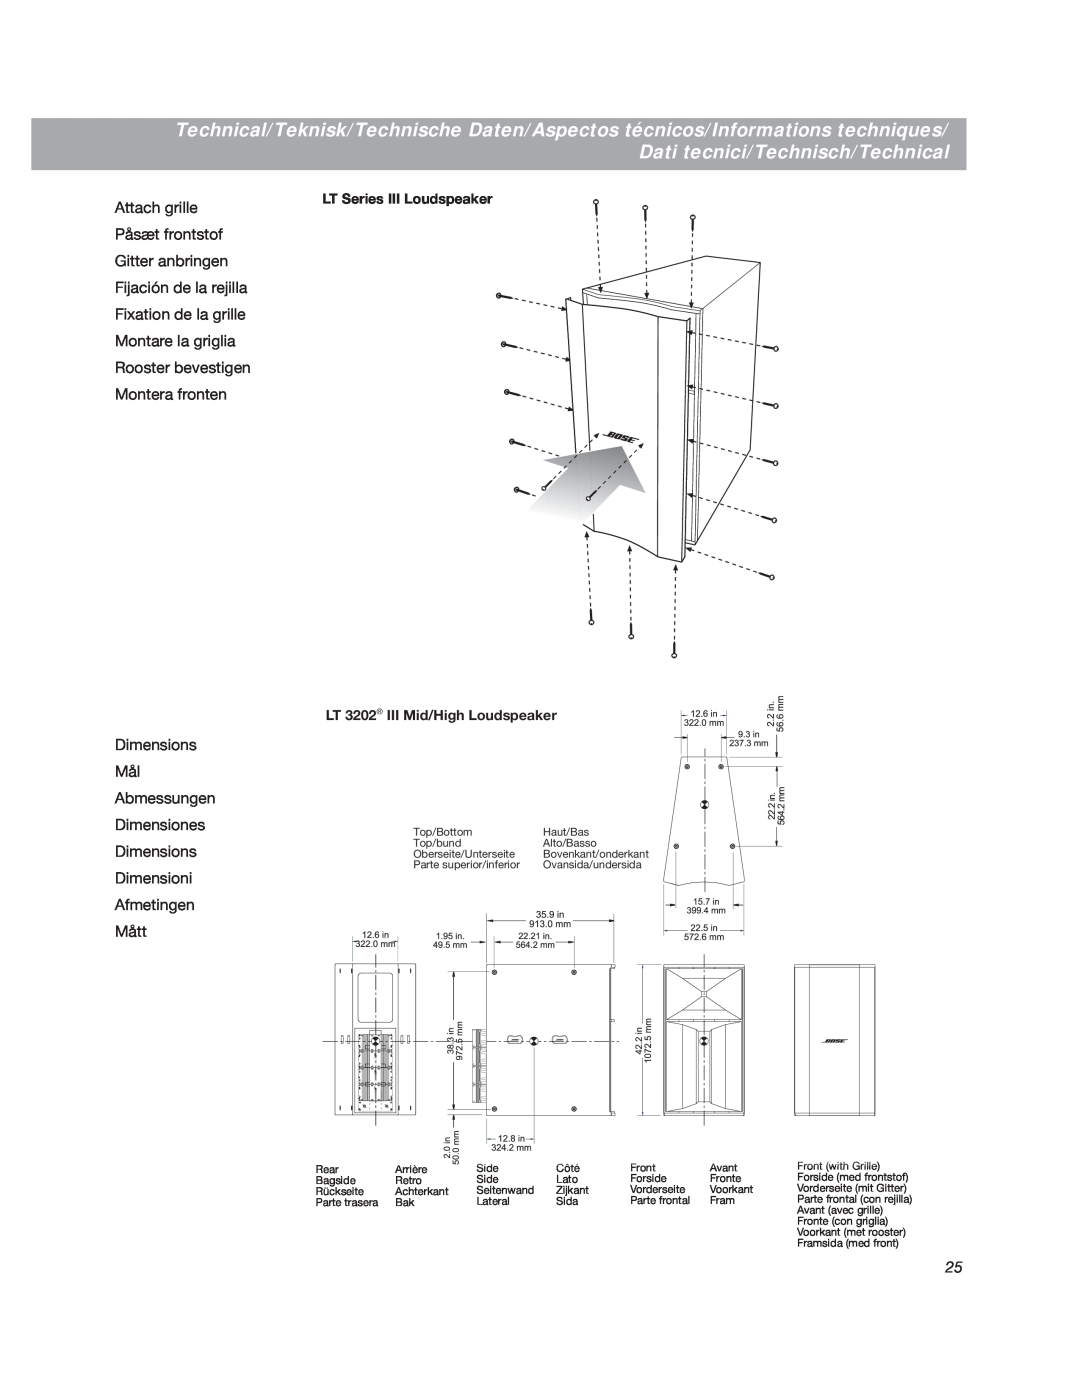 Bose LT3202 manual Dimensions Mål Abmessungen Dimensiones Dimensions Dimensioni, Afmetingen Mått 